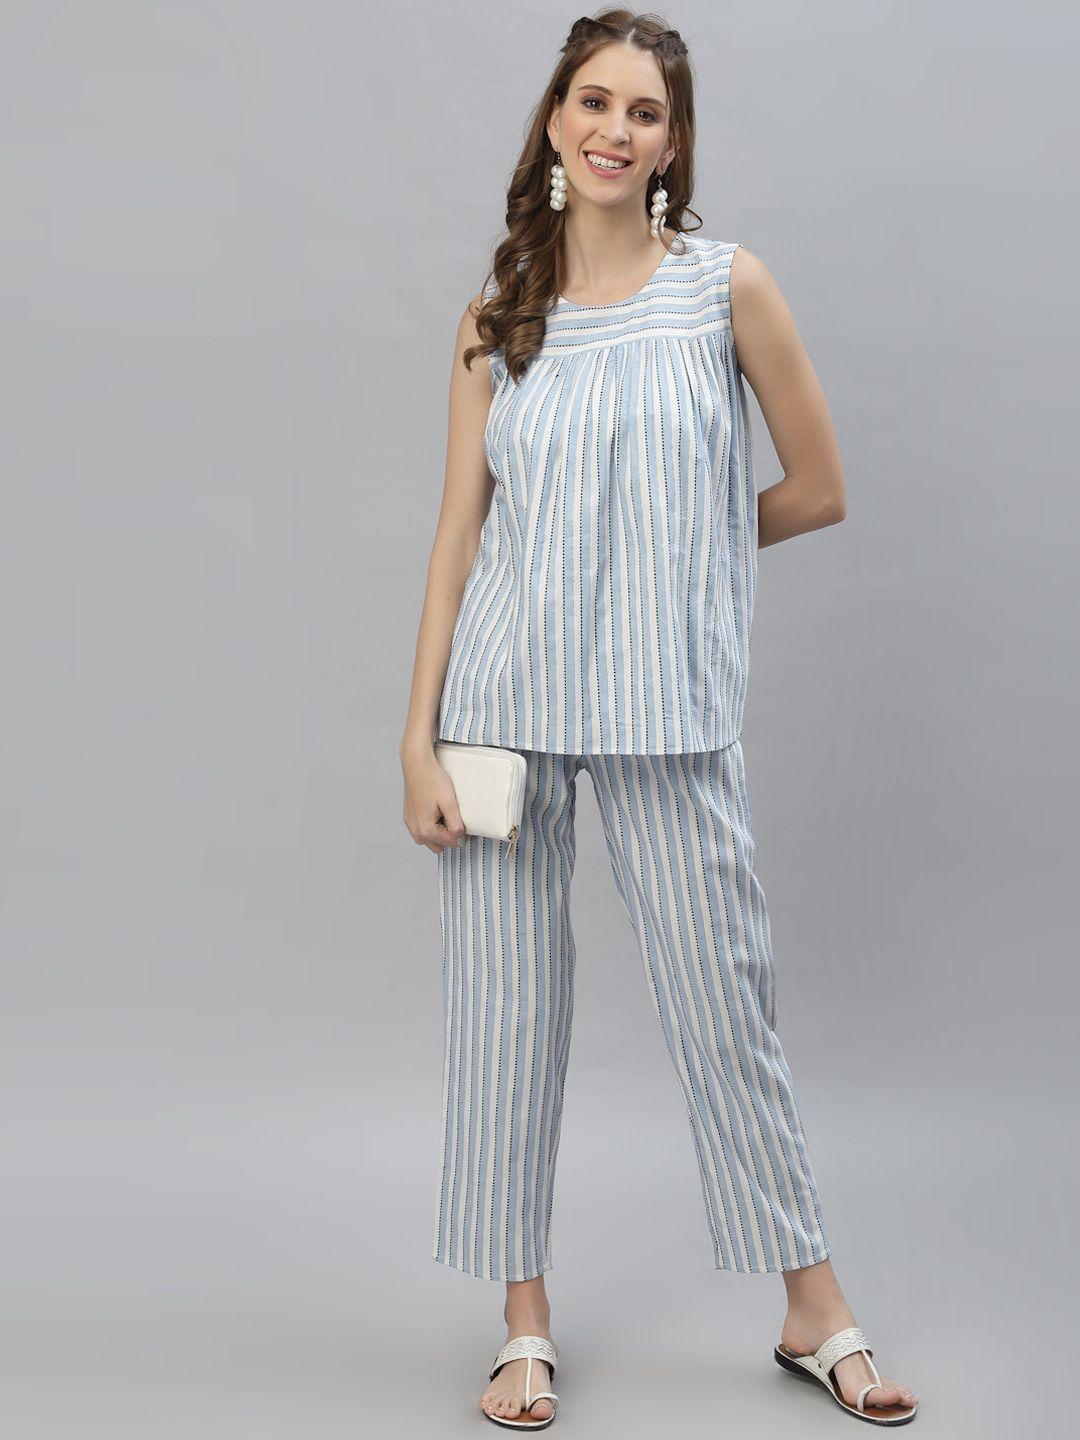 stylum women blue & white self woven striped cotton blend top and pant set